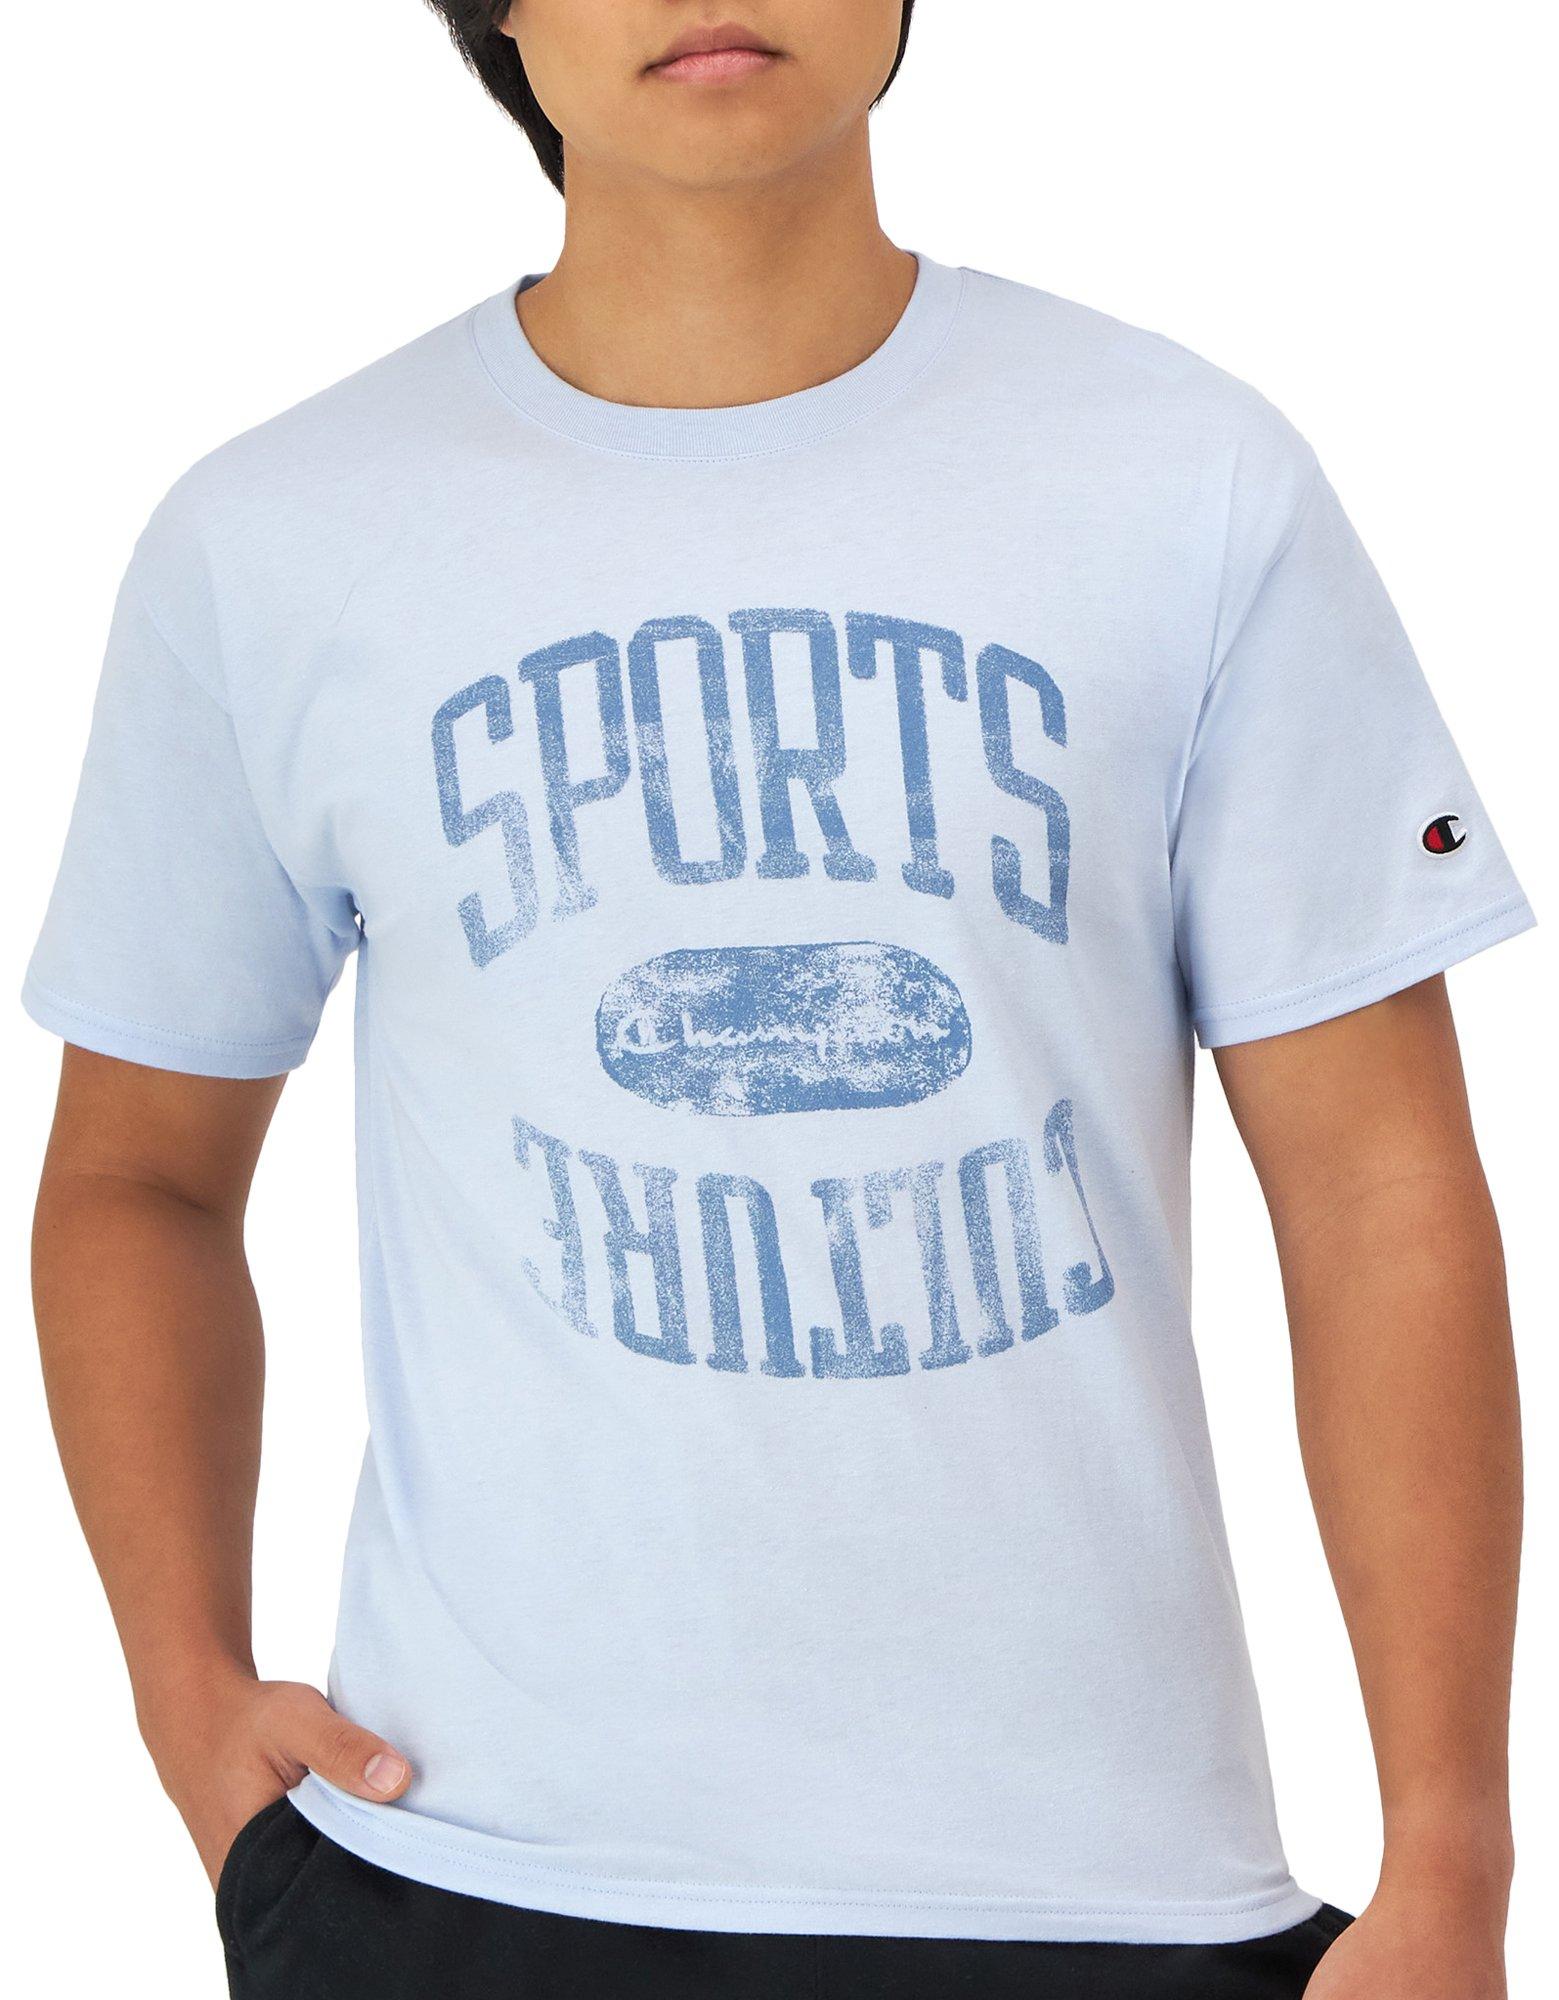 Mens Classic Sports Culture Graphic T-Shirt